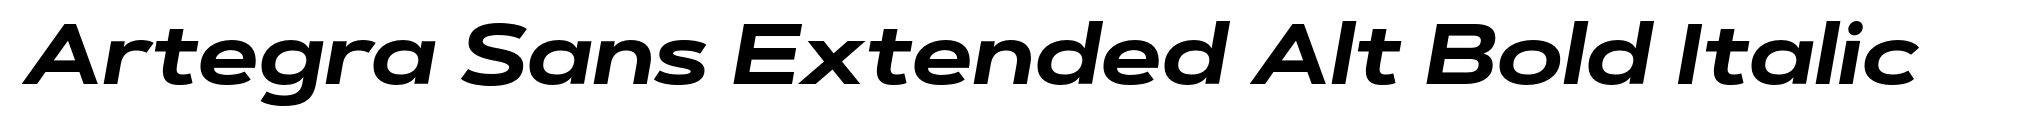 Artegra Sans Extended Alt Bold Italic image